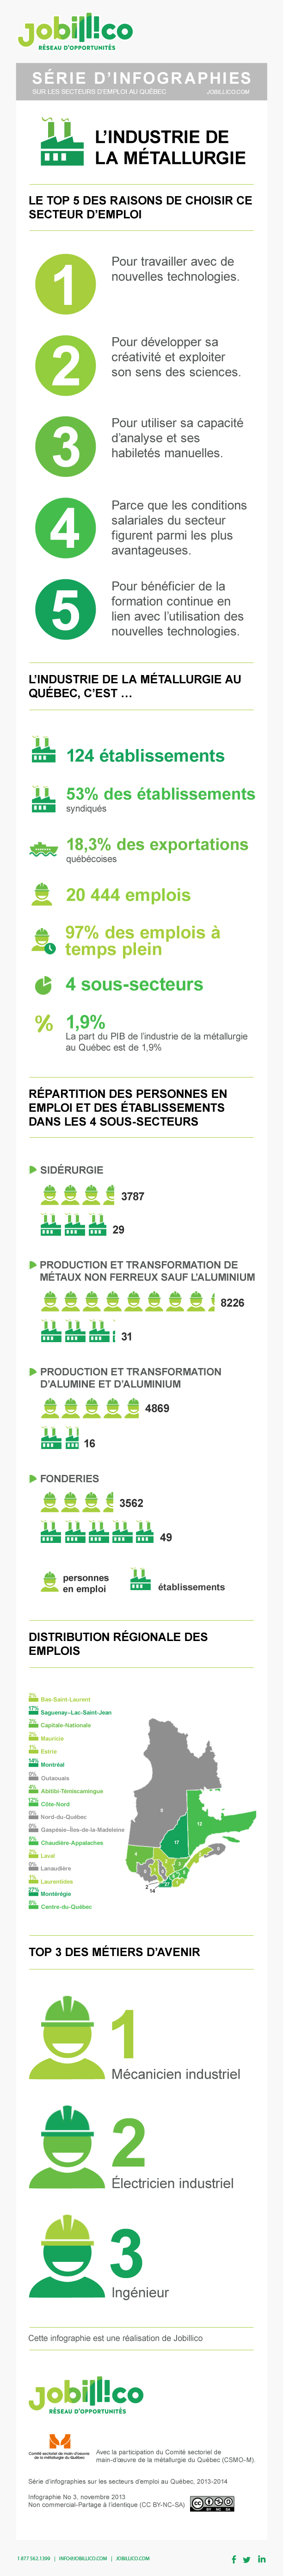 infographie-industrie-metallurgie-quebec